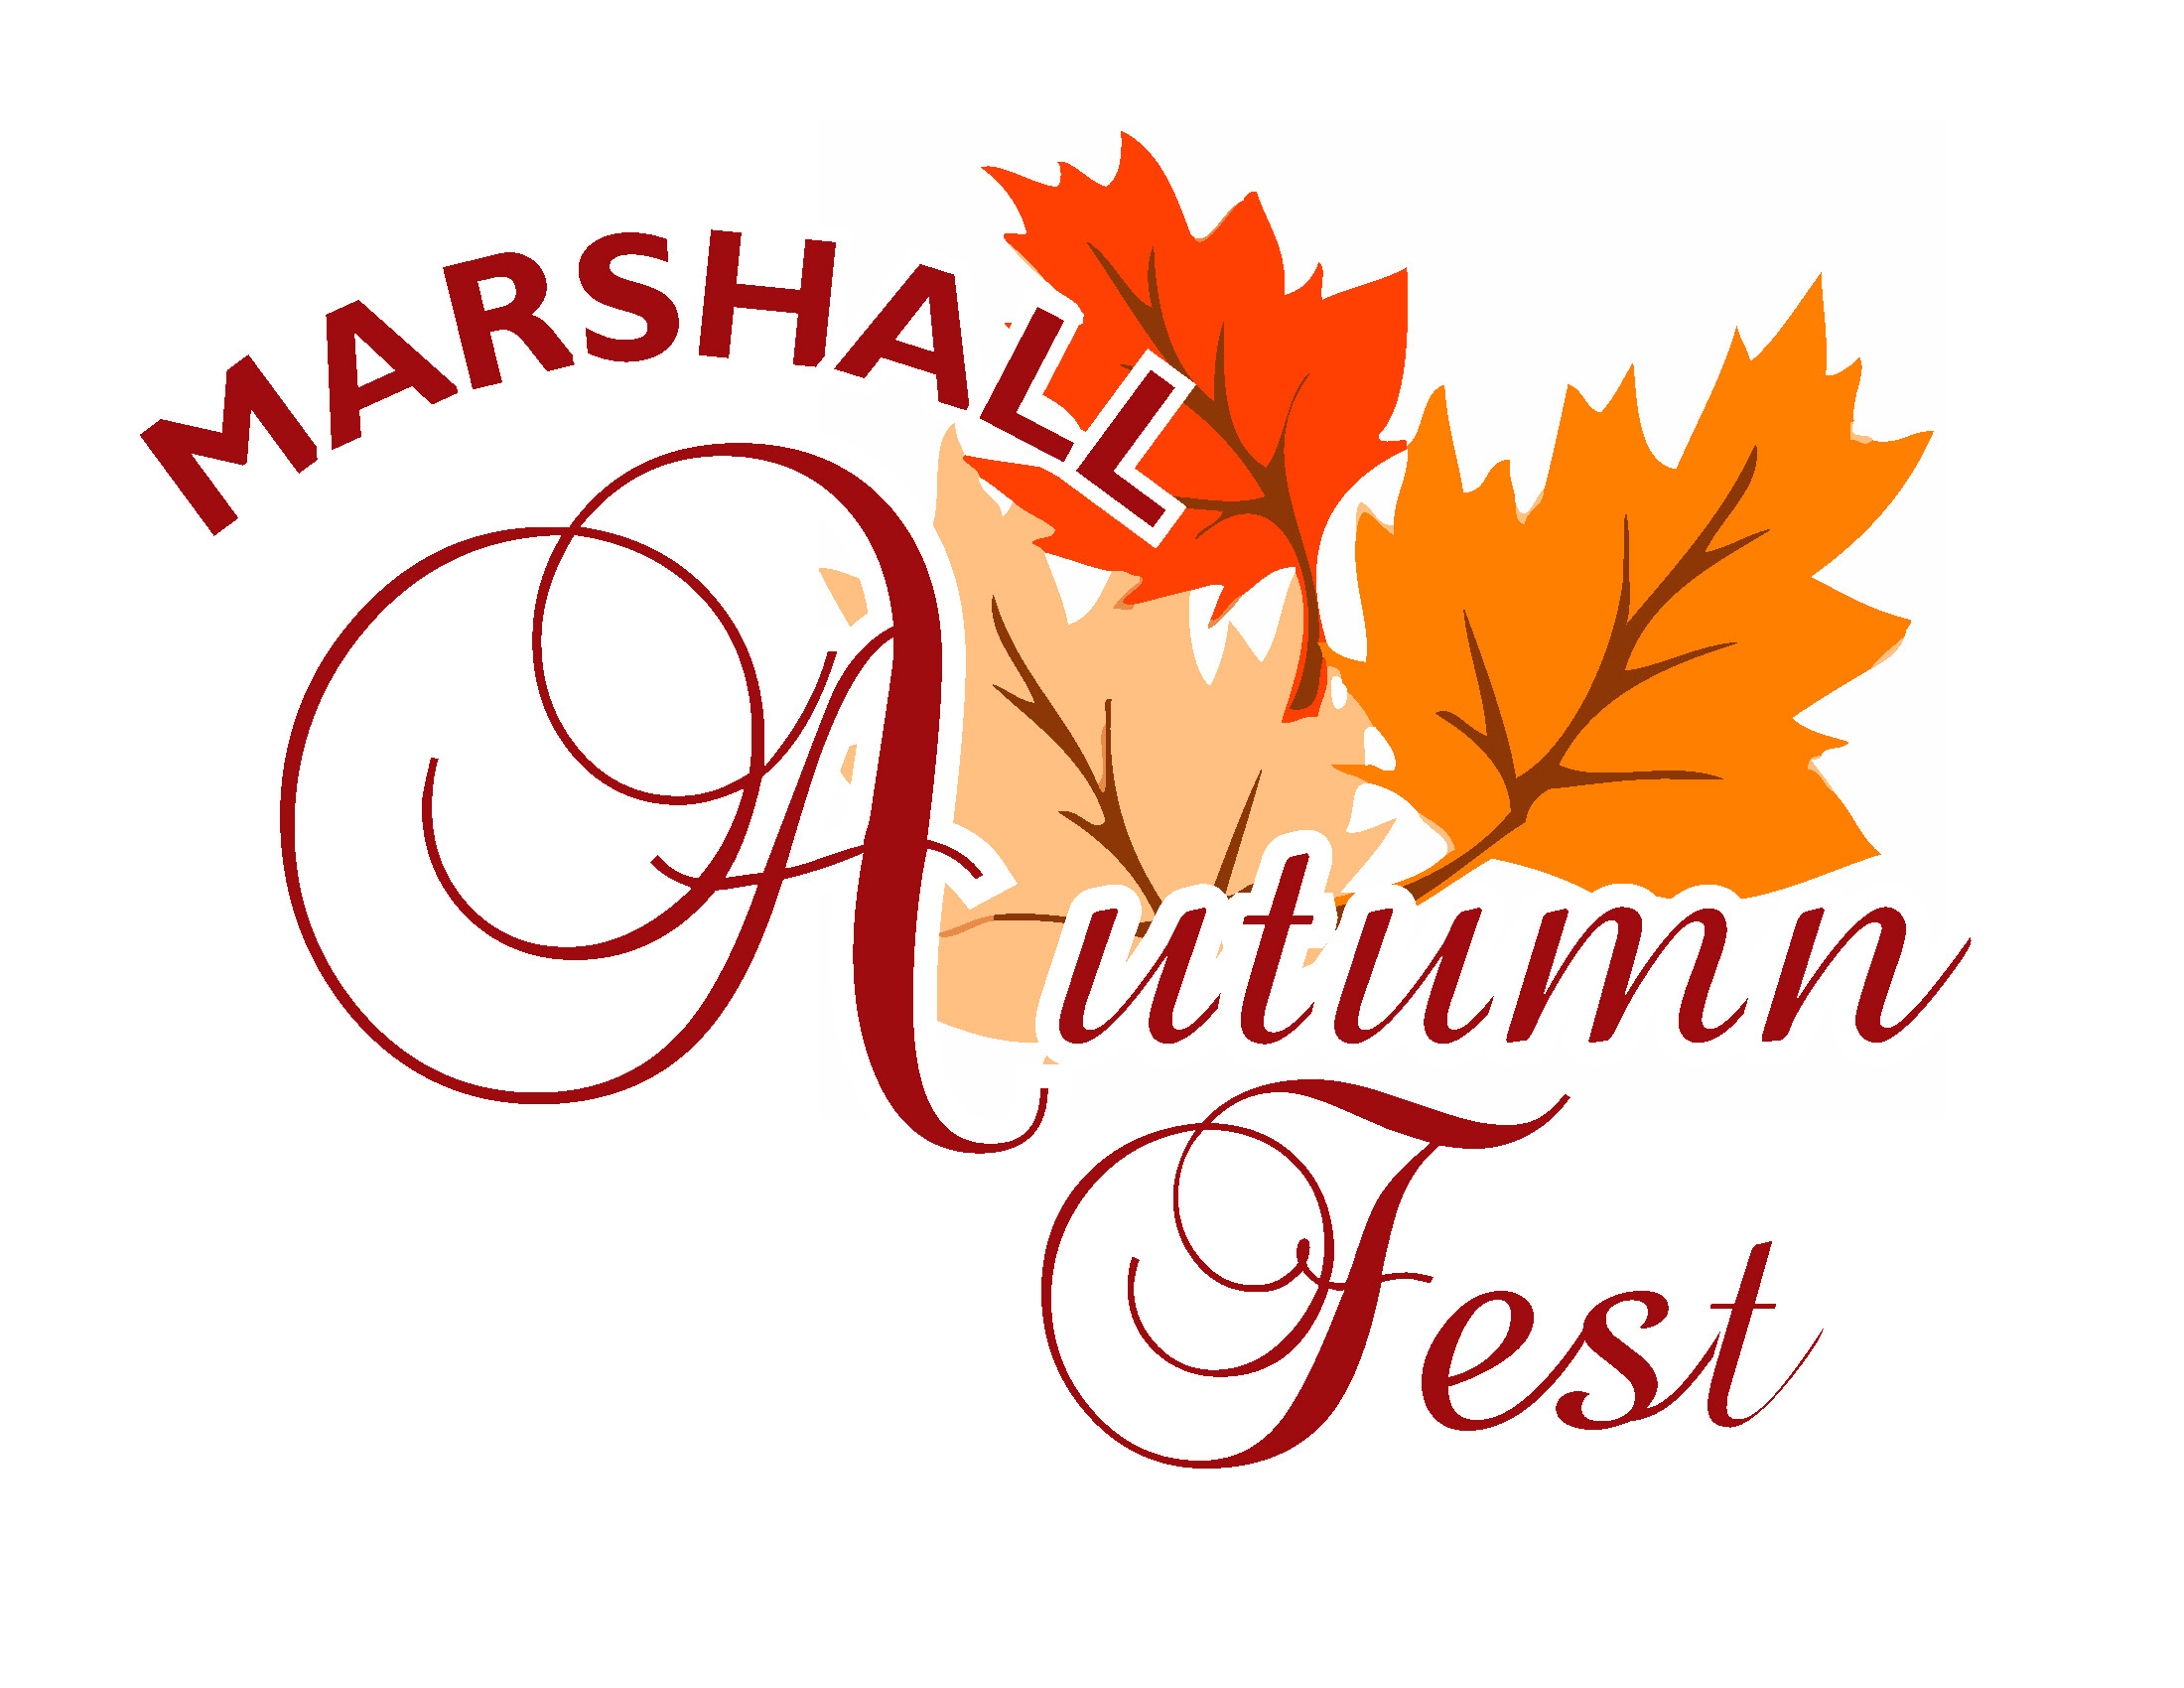 Marshall Autumn Fest